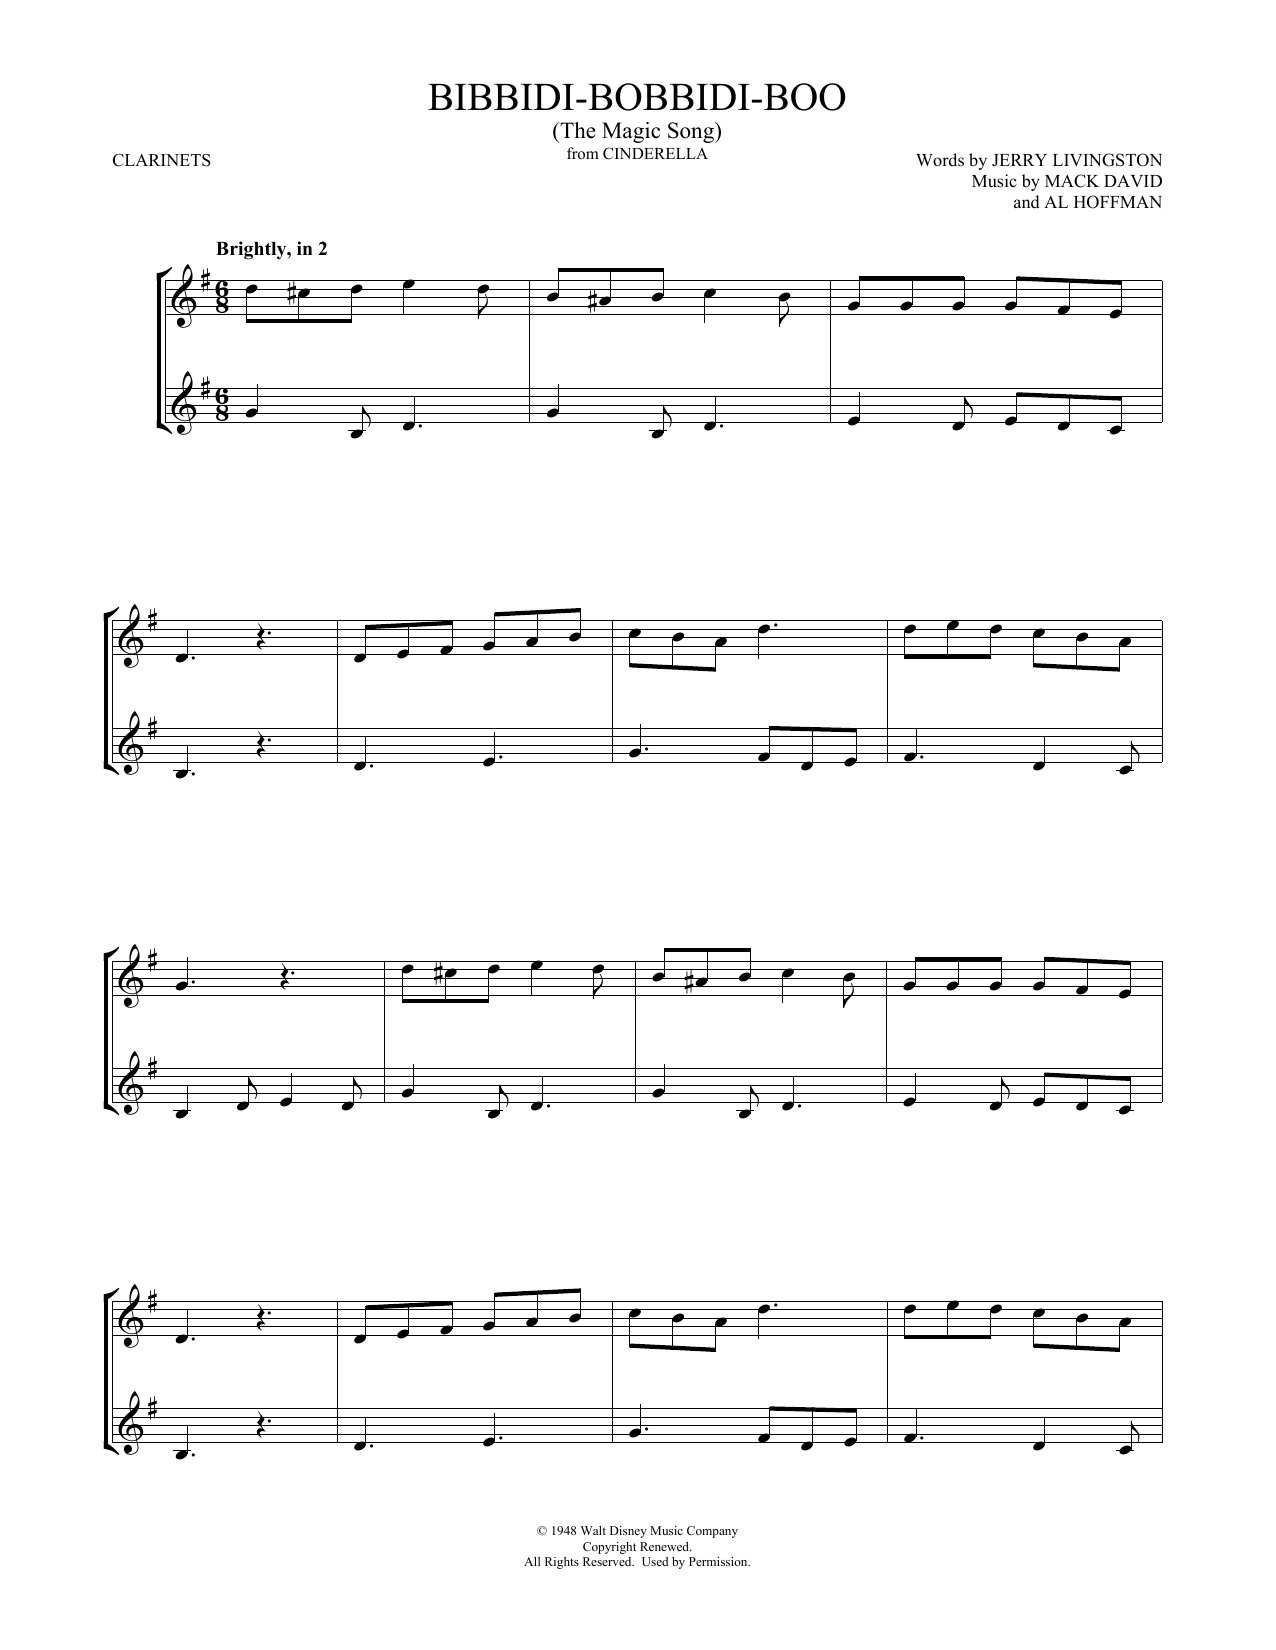 Verna Felton Bibbidi-Bobbidi-Boo (The Magic Song) (from Cinderella) Sheet Music Notes & Chords for Alto Sax Duet - Download or Print PDF